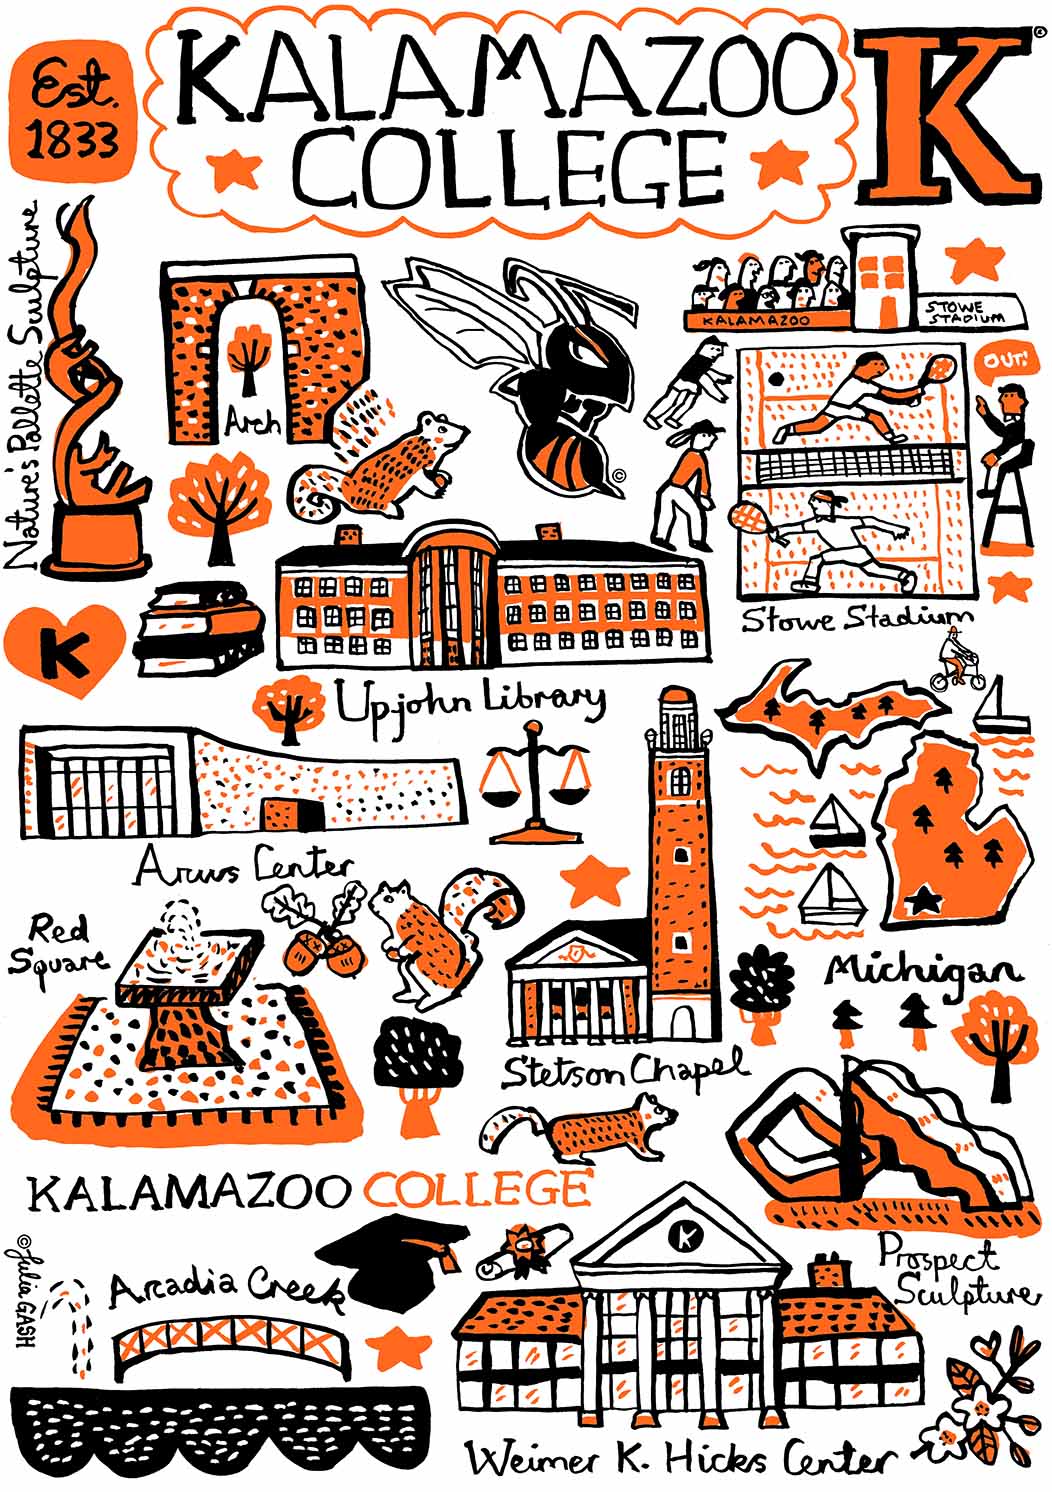 Kalamazoo College Design by Julia Gash